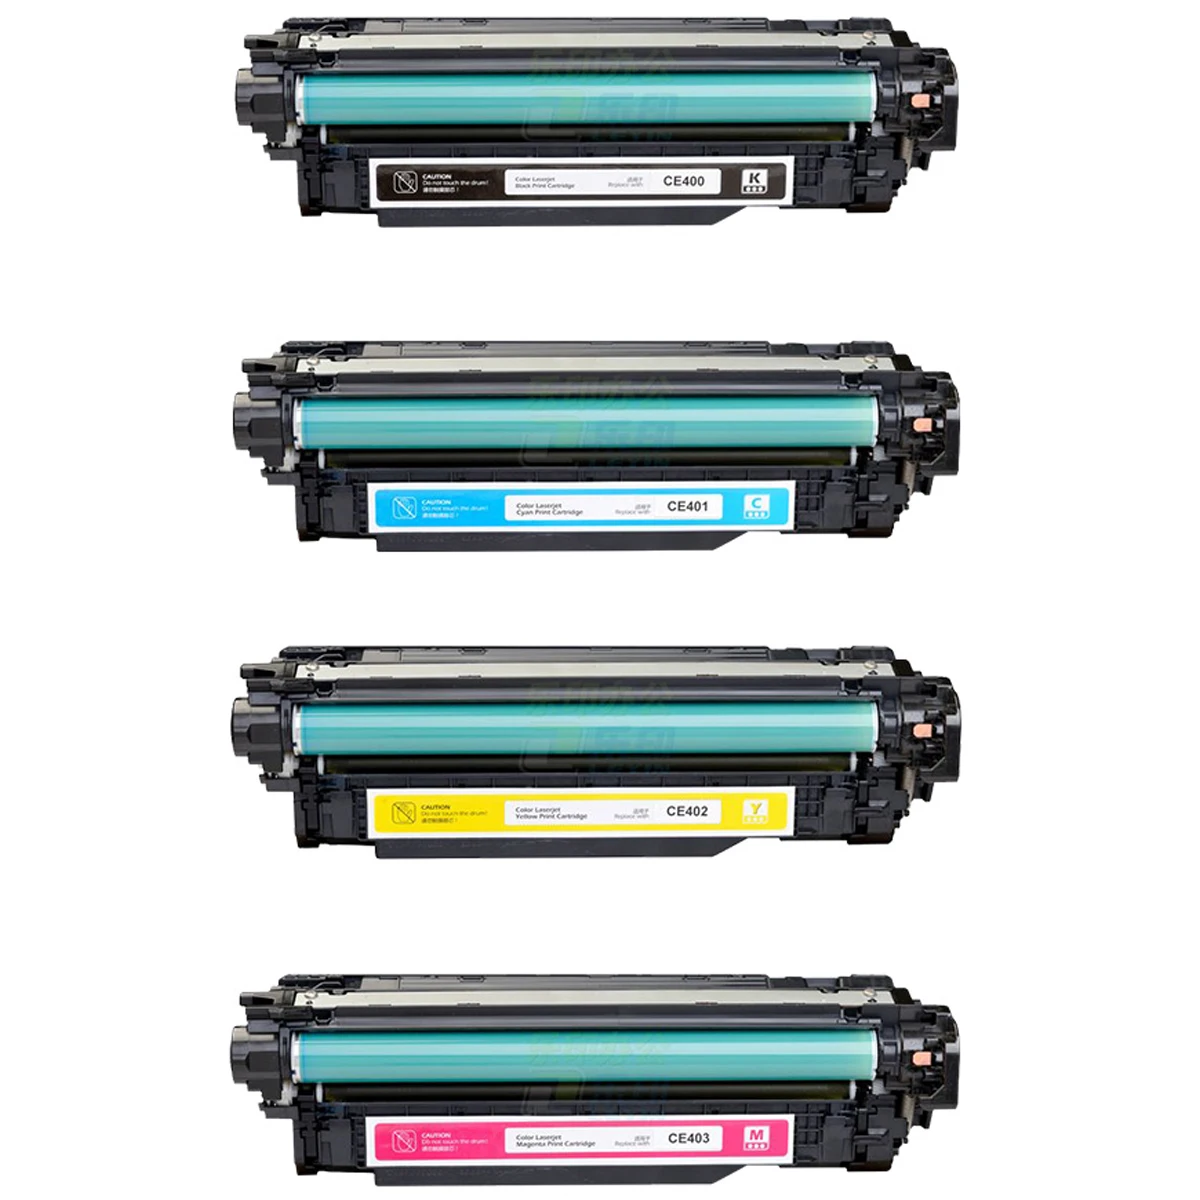 

Картридж с тонером для HP Color LaserJet Enterprise 500 500 M551 500 M551DN 500 M551N 500 M551XH M551DN M551DN M551 507A/CE400A 400